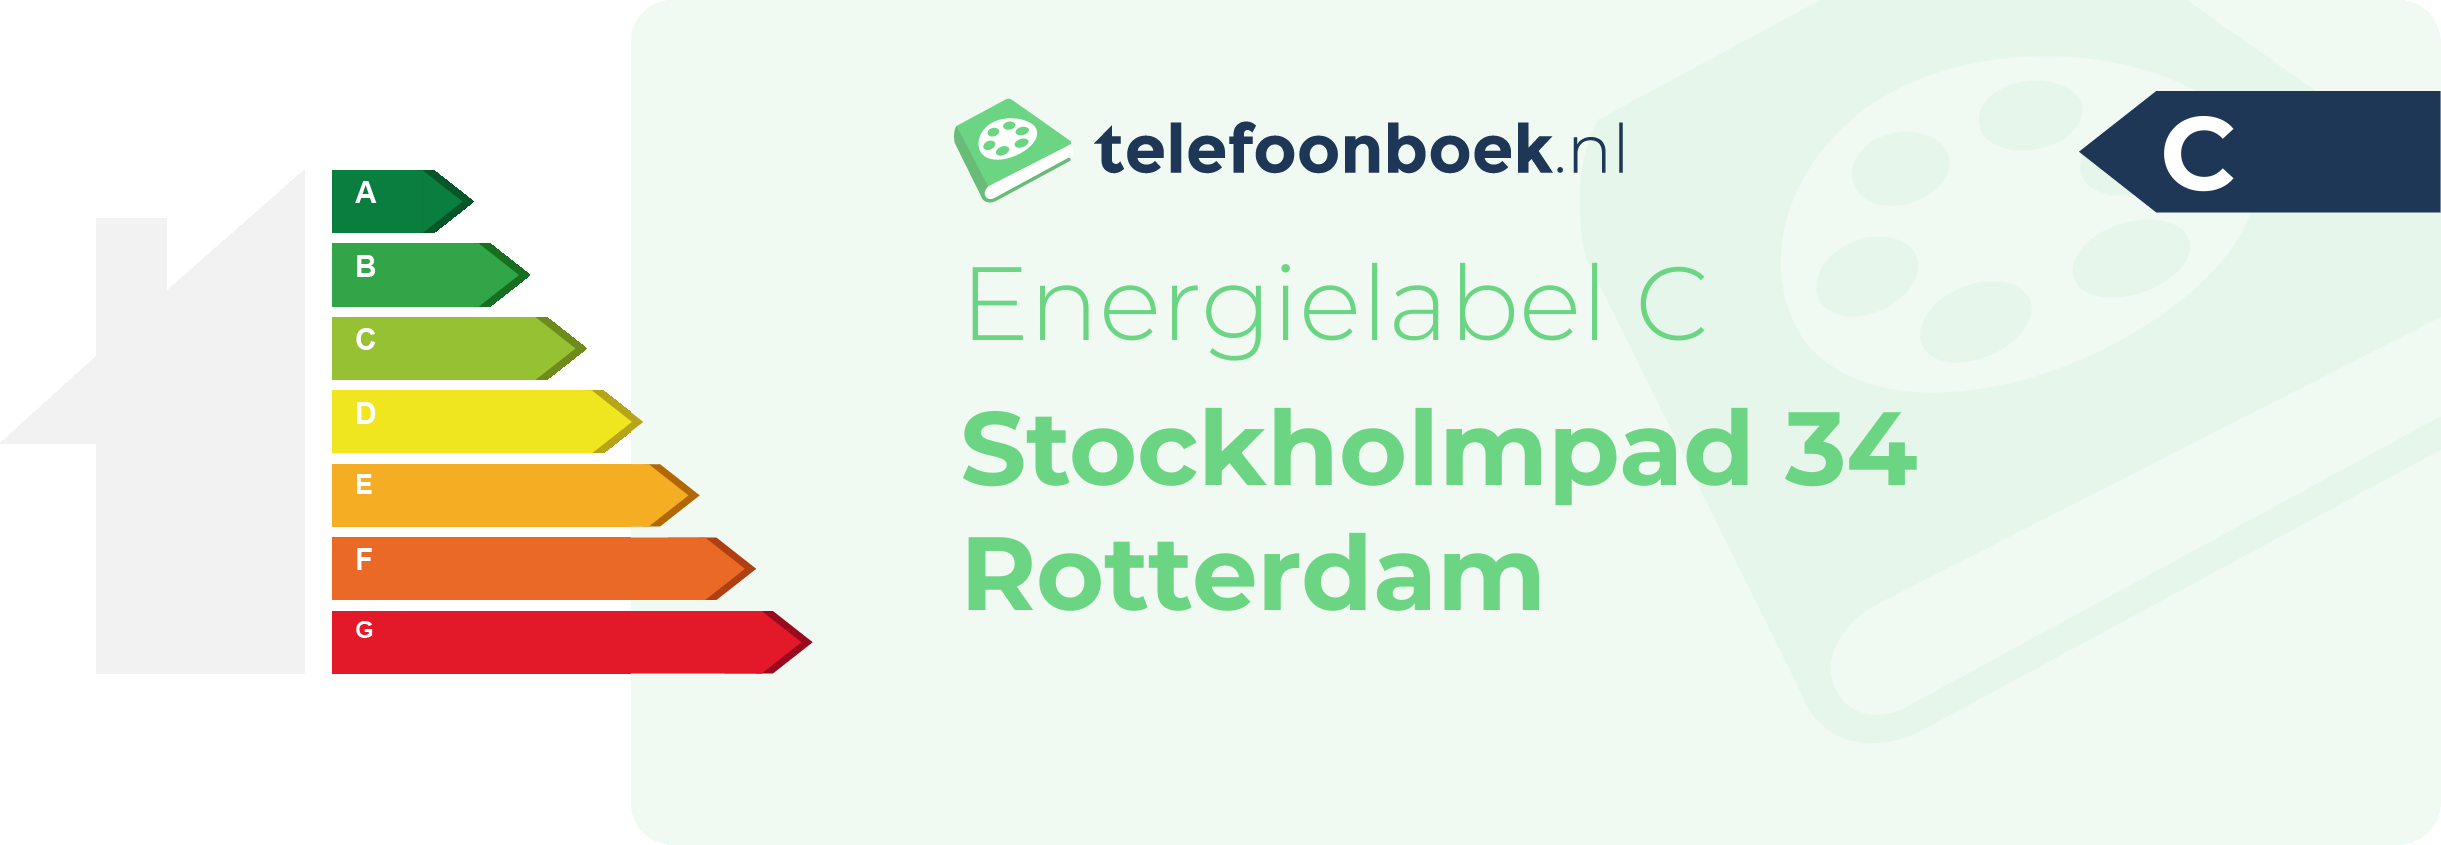 Energielabel Stockholmpad 34 Rotterdam